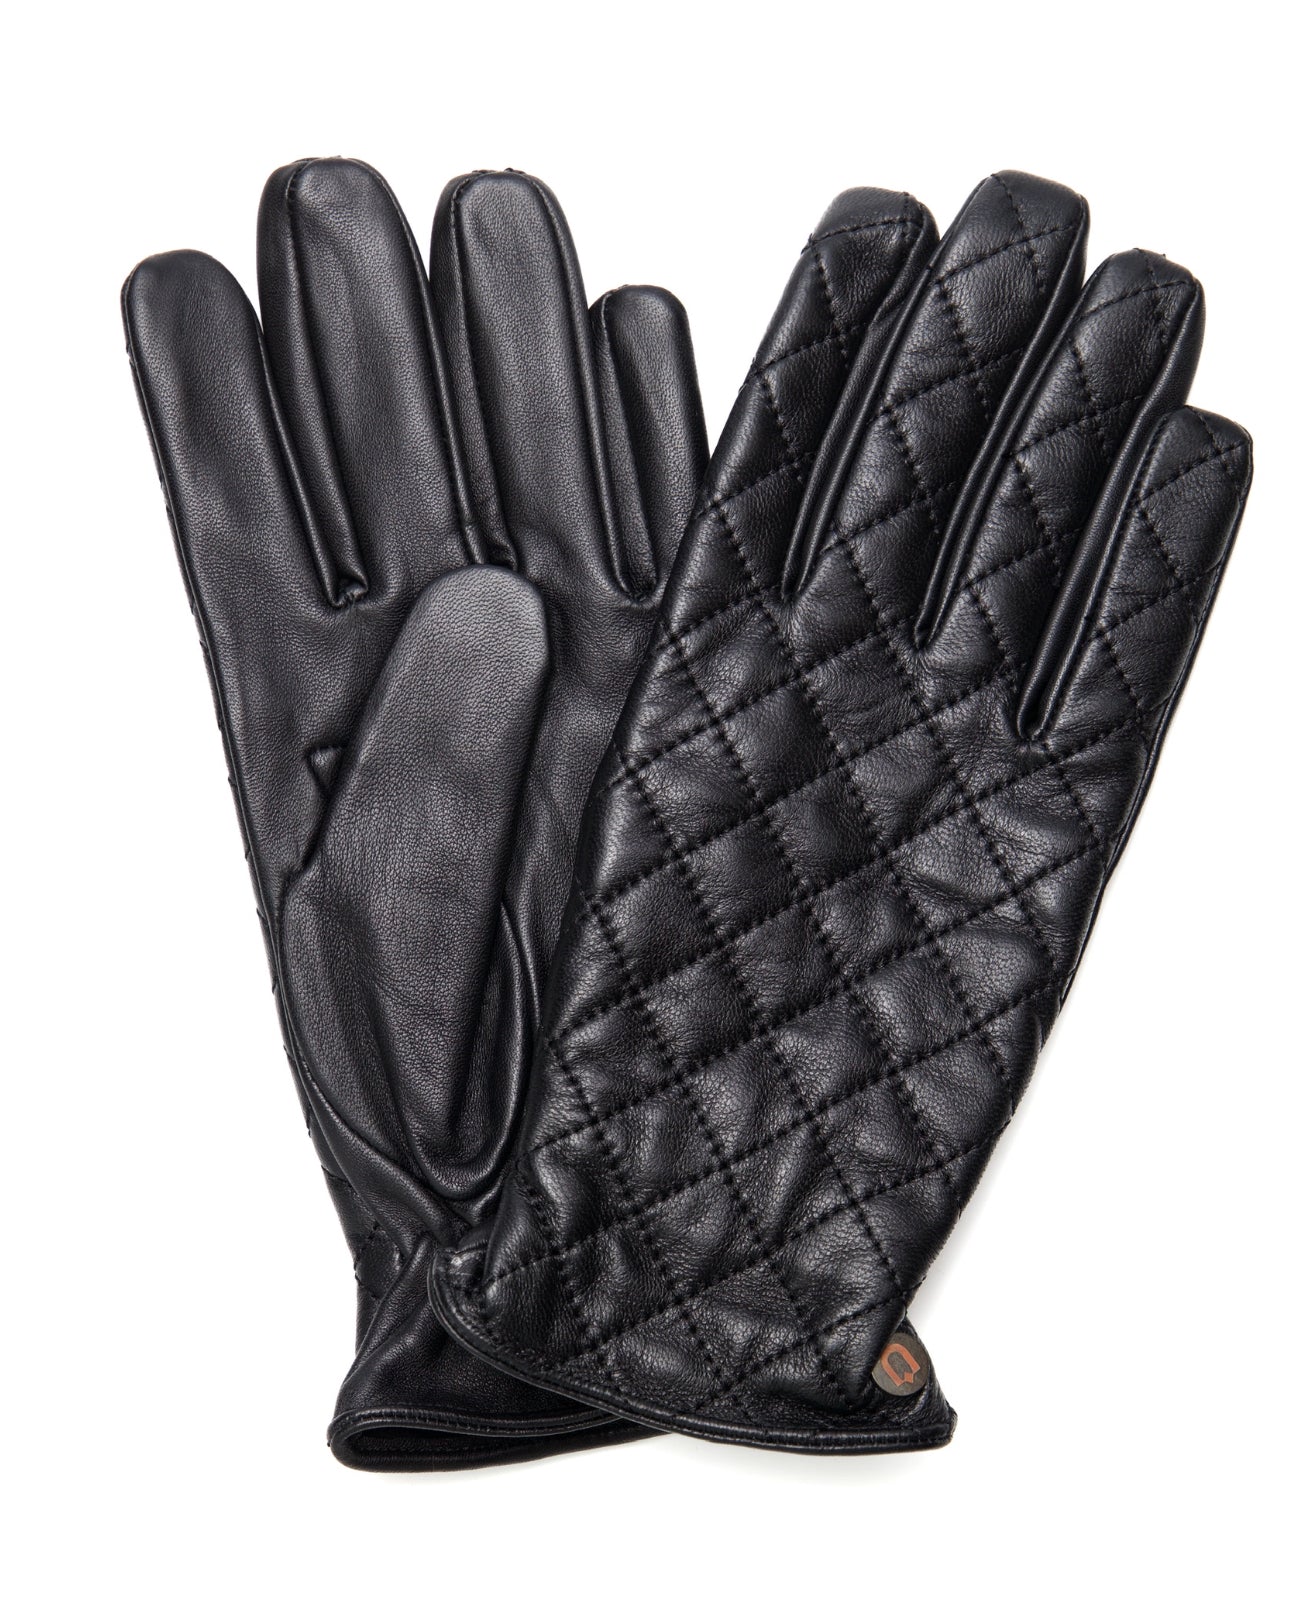 Lambskin Leather Gloves - Black Diamond - Gloves by Urbbana